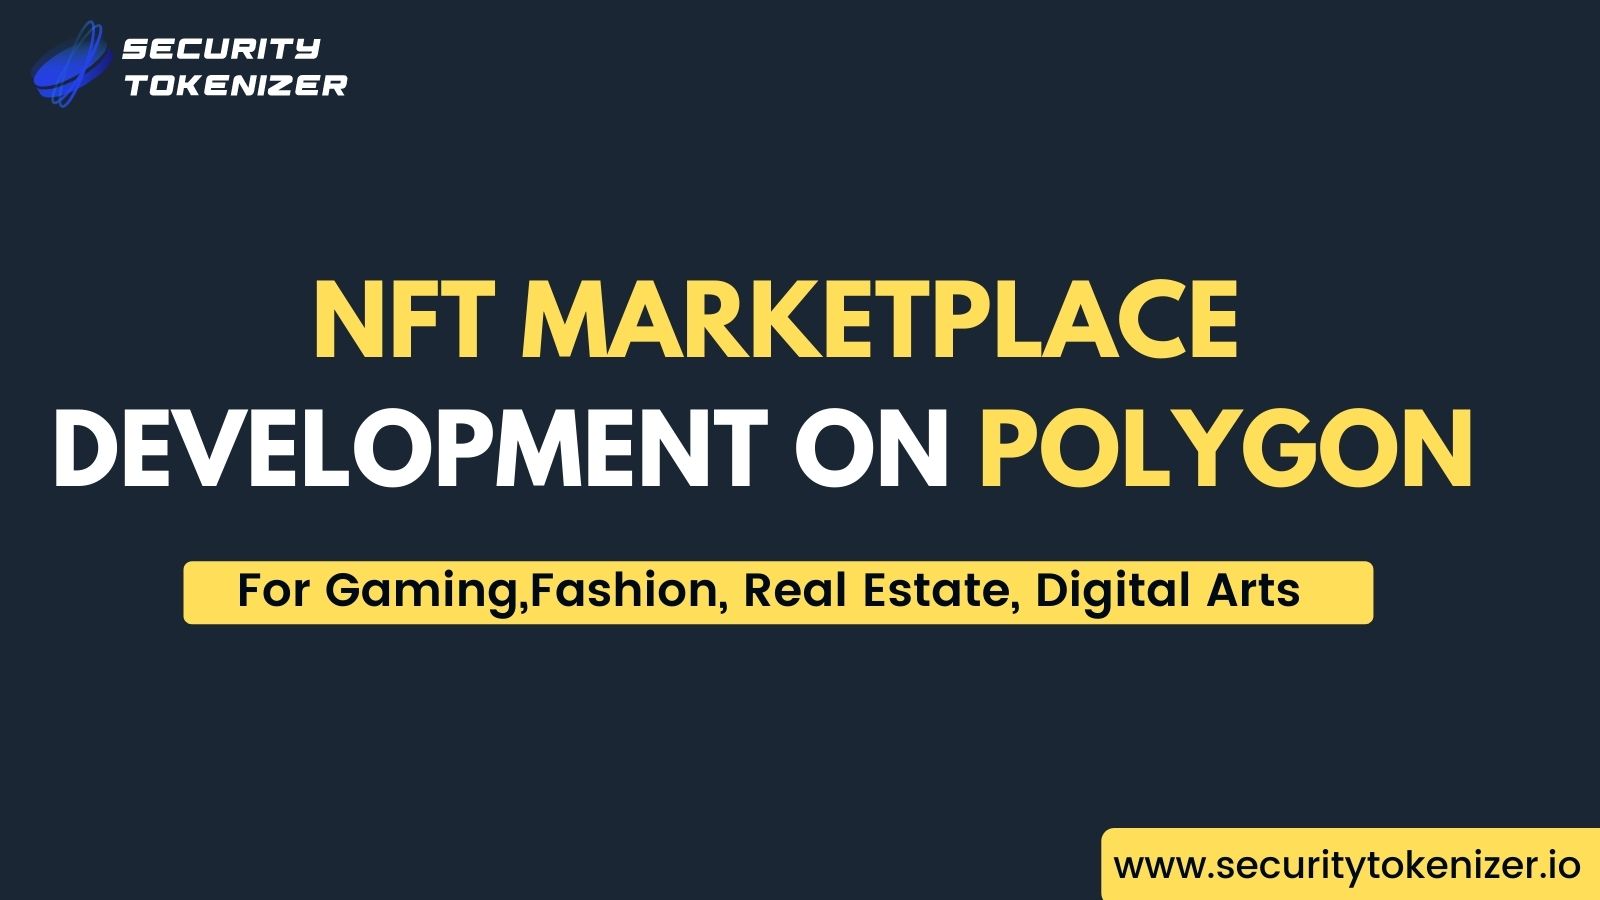 Article about Polygon NFT Marketplace Development